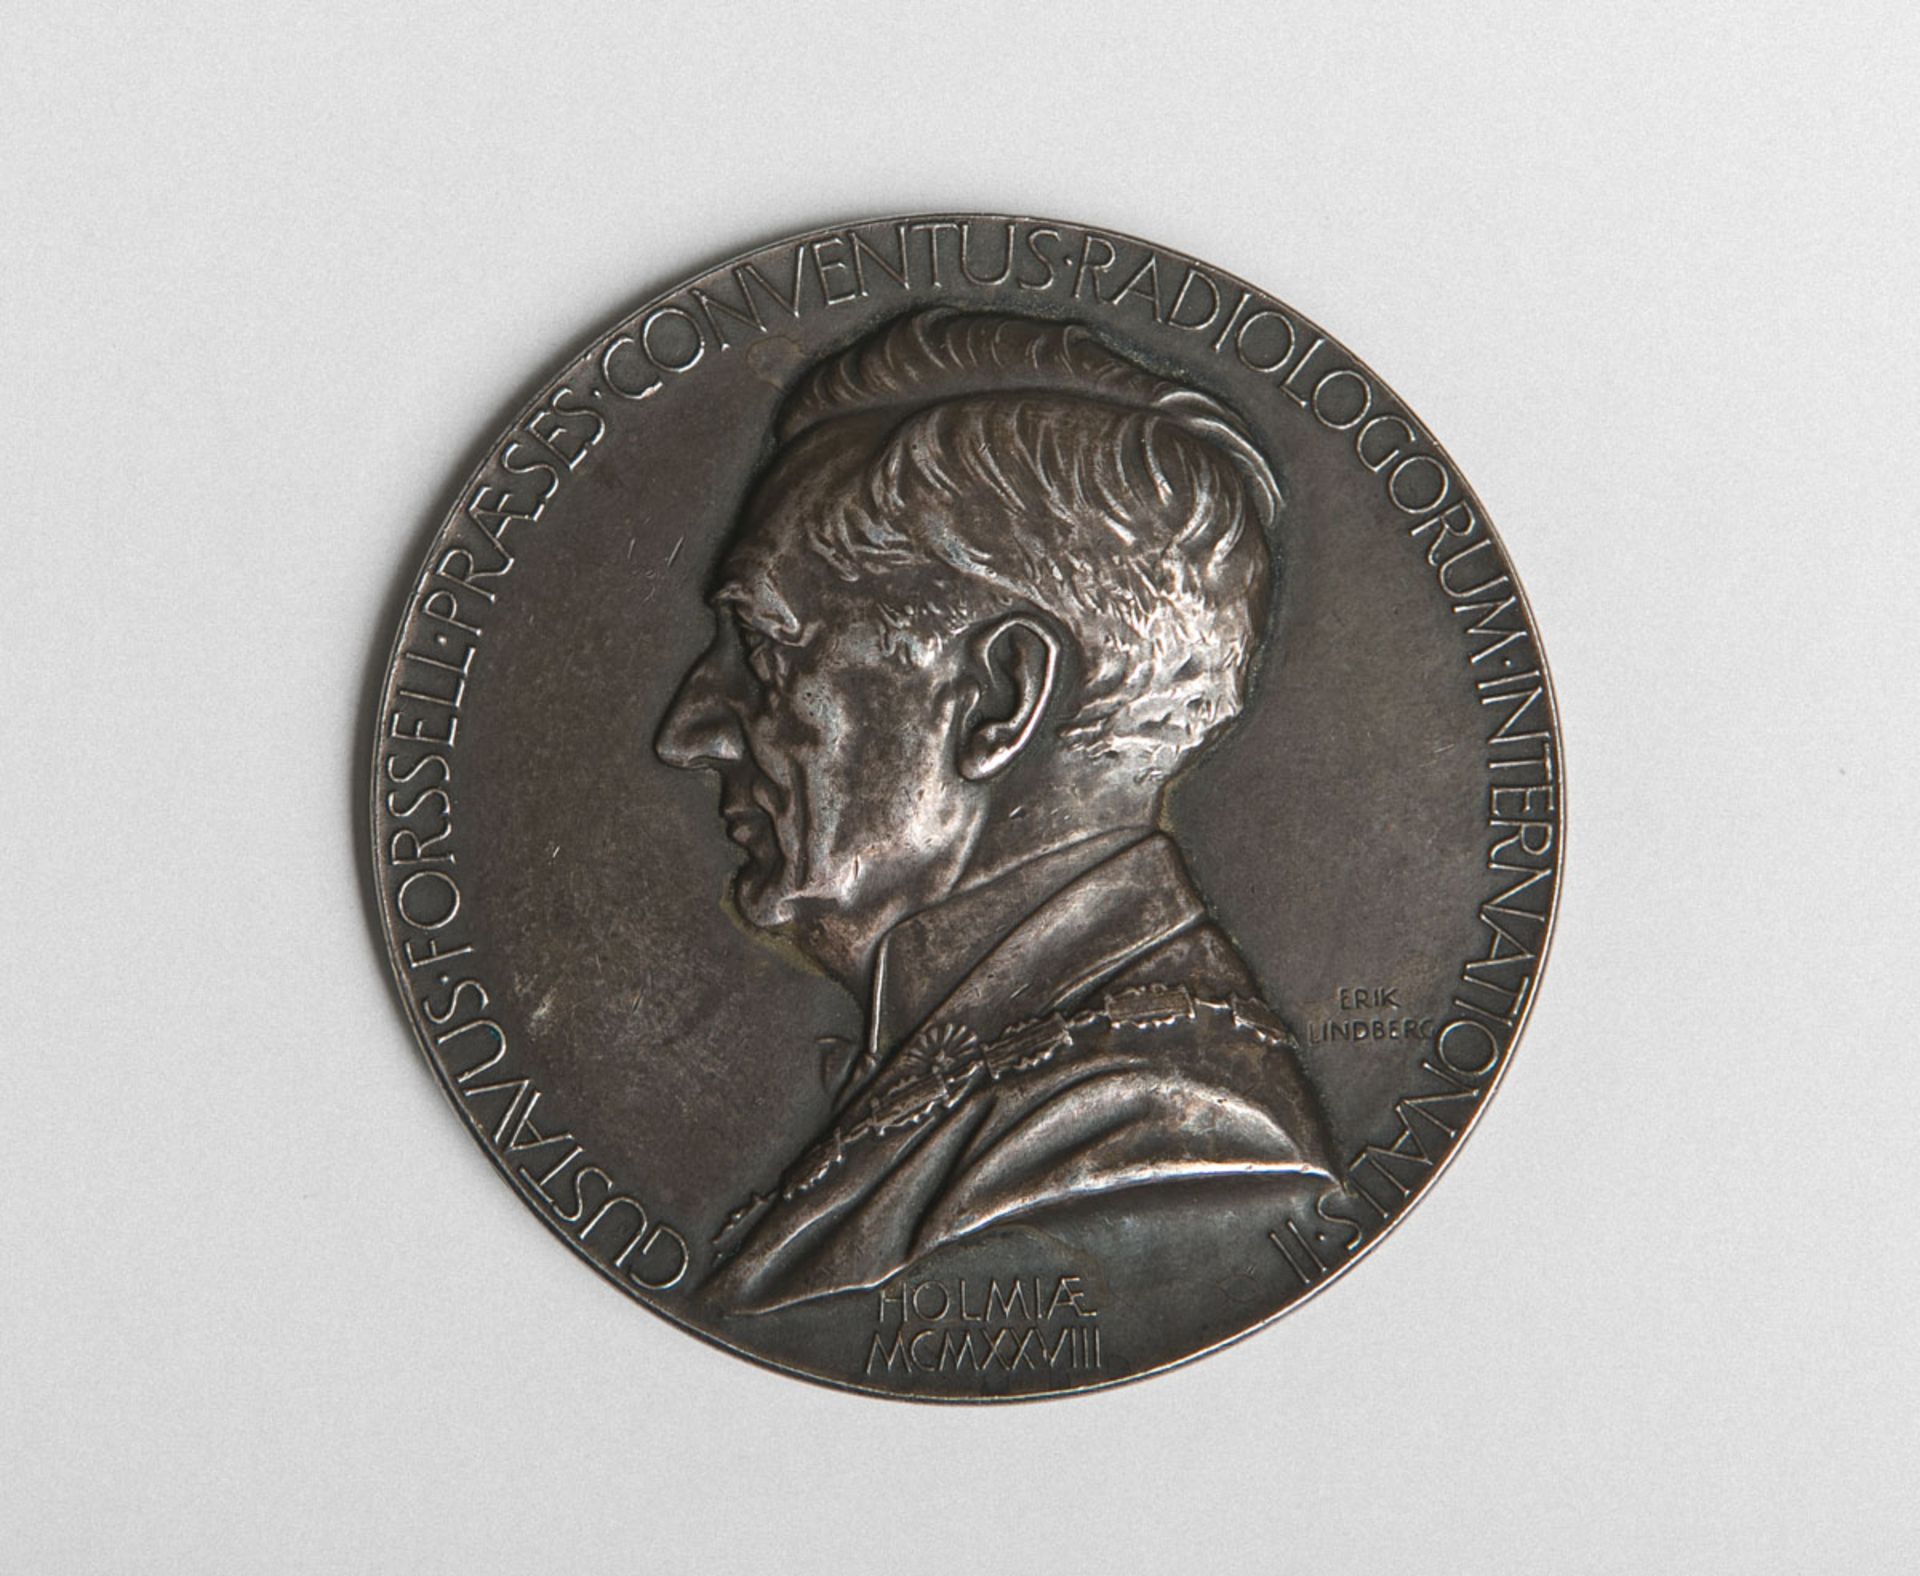 Medaille "Gustavus Forssell praeses Conventus Radiologurum internationalis II"